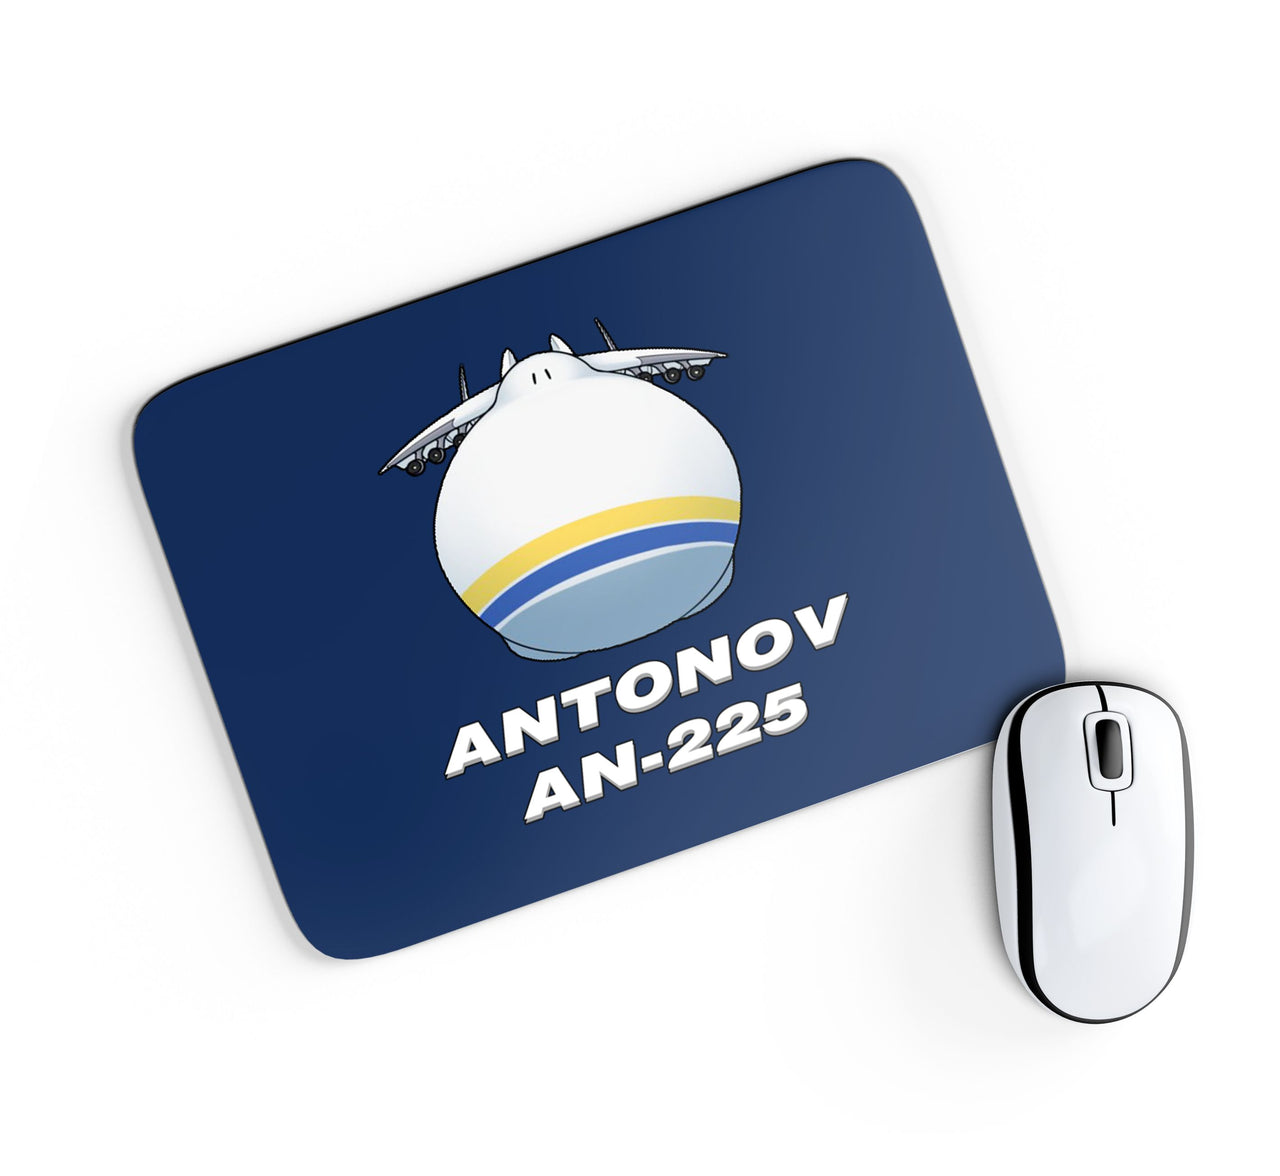 Antonov AN-225 (20) Designed Mouse Pads